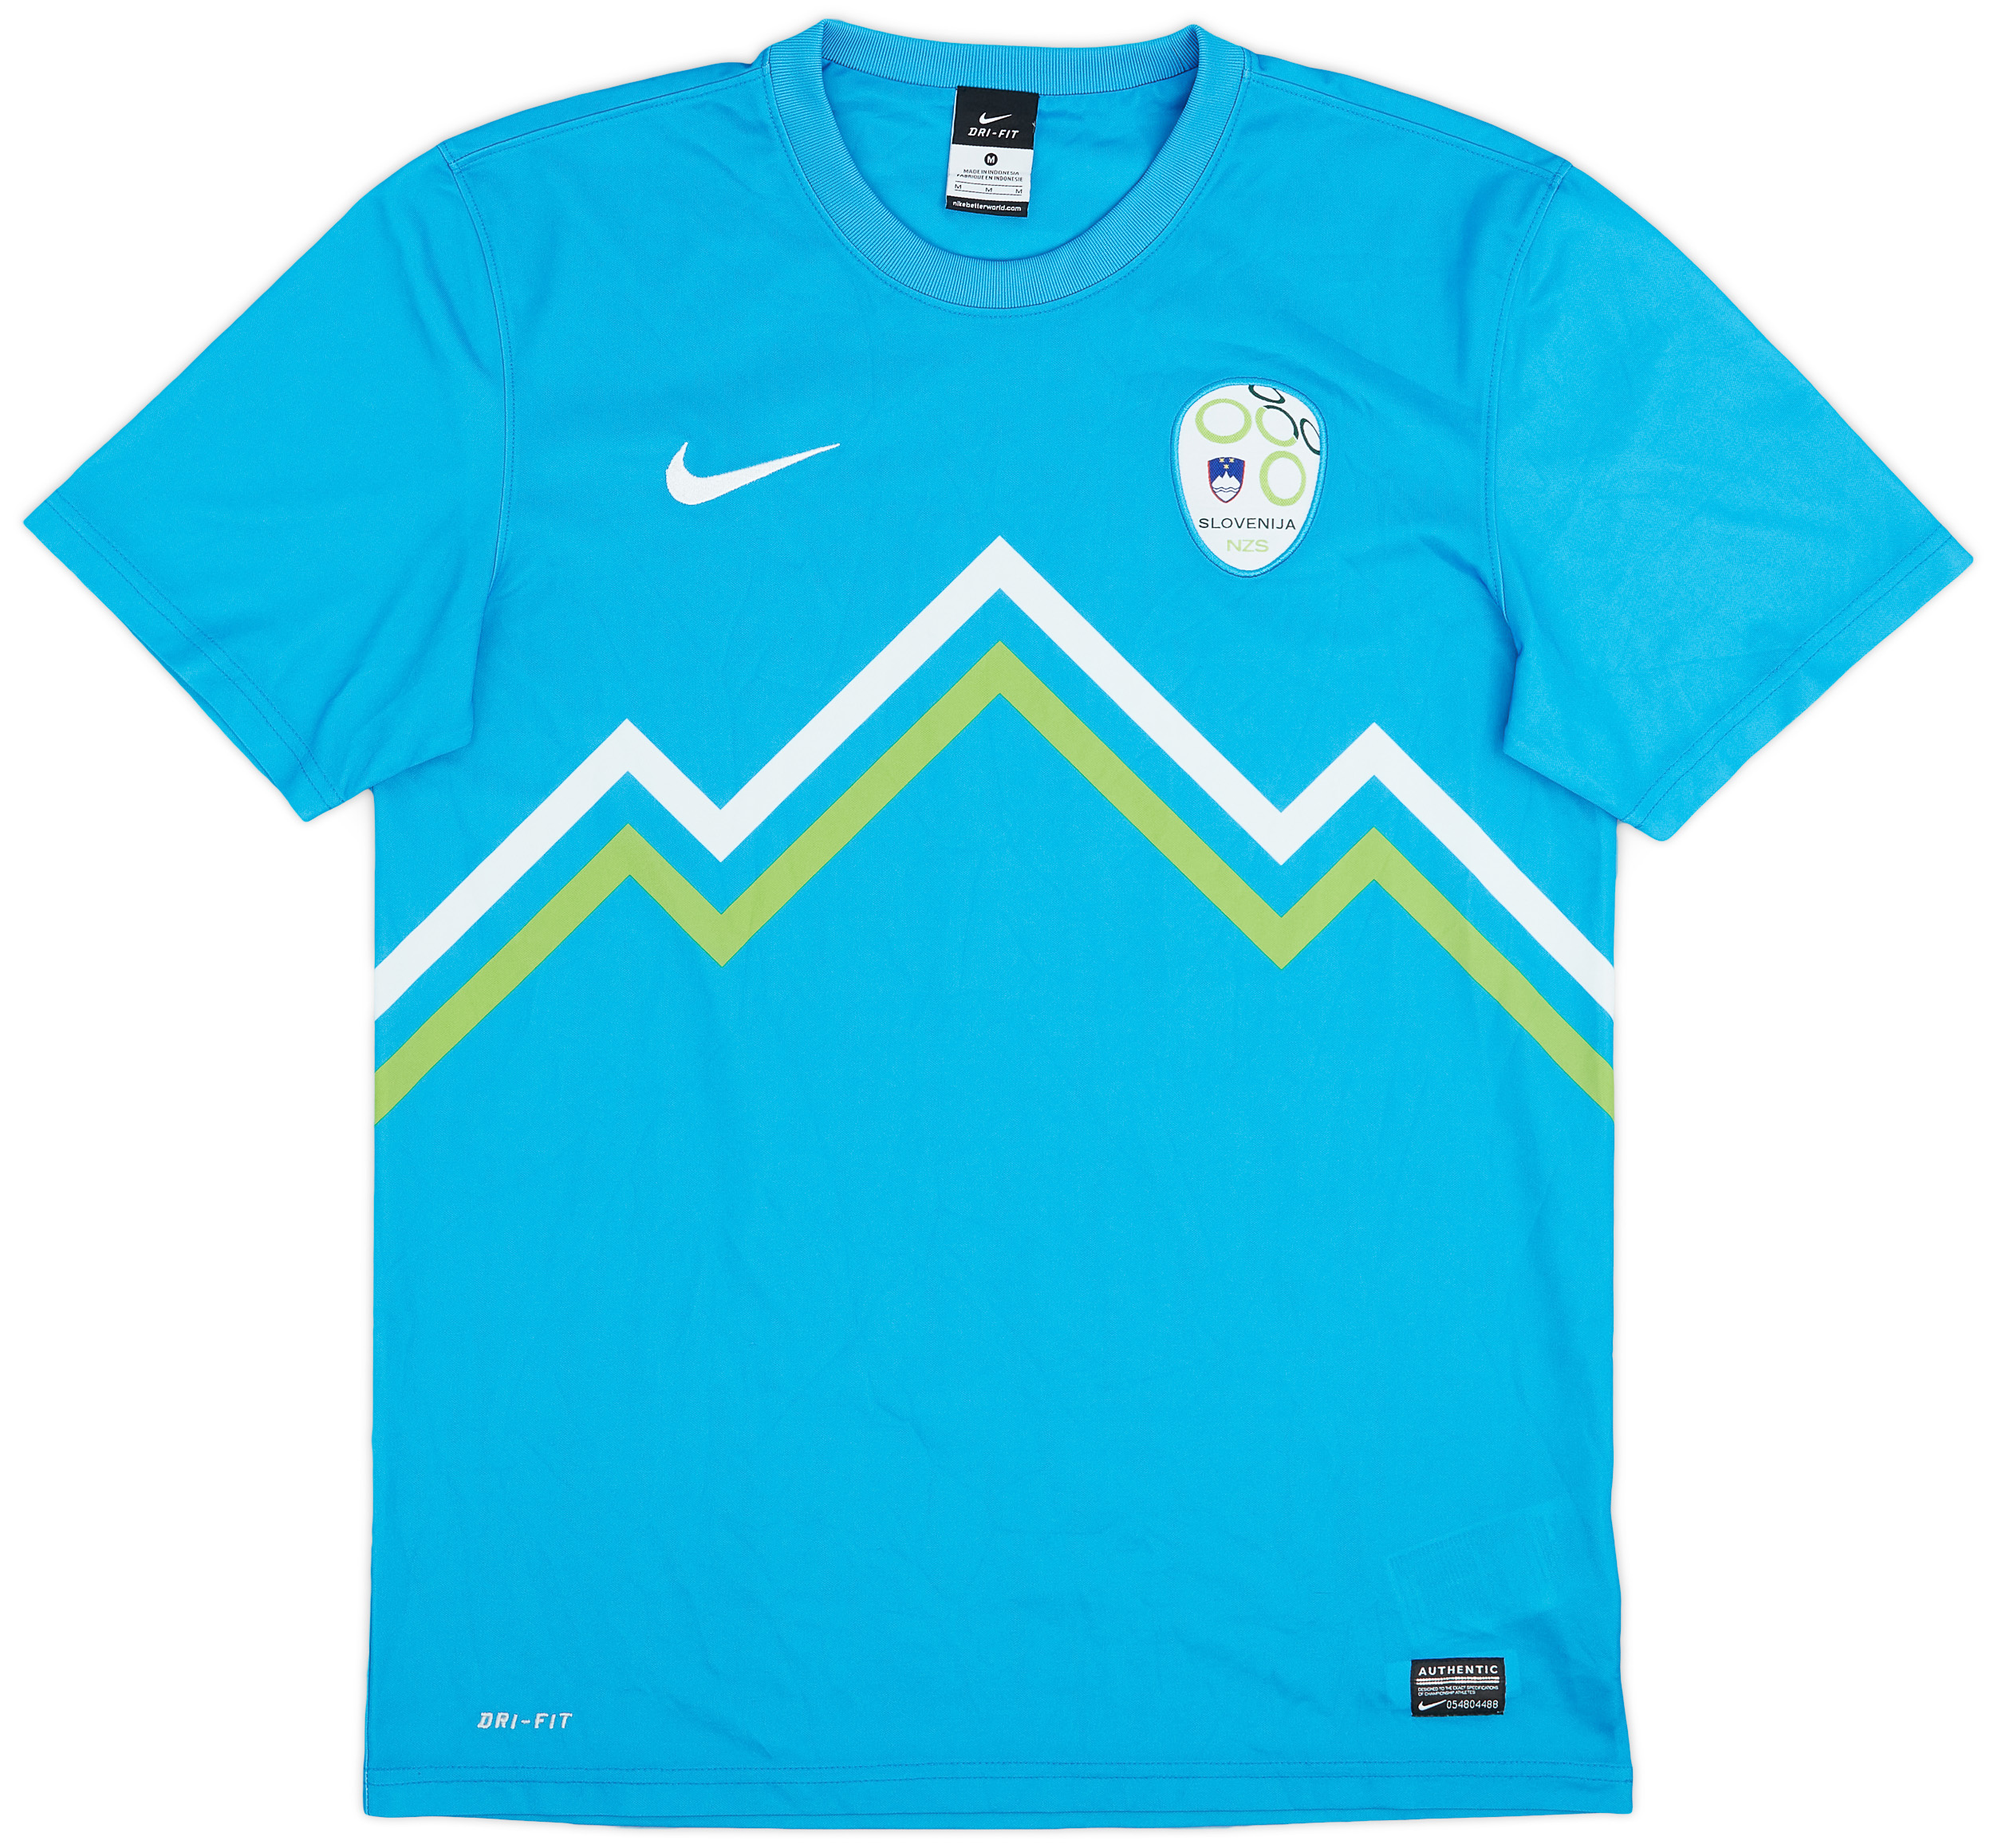 2012-13 Slovenia Basic Away Shirt - 9/10 - ()